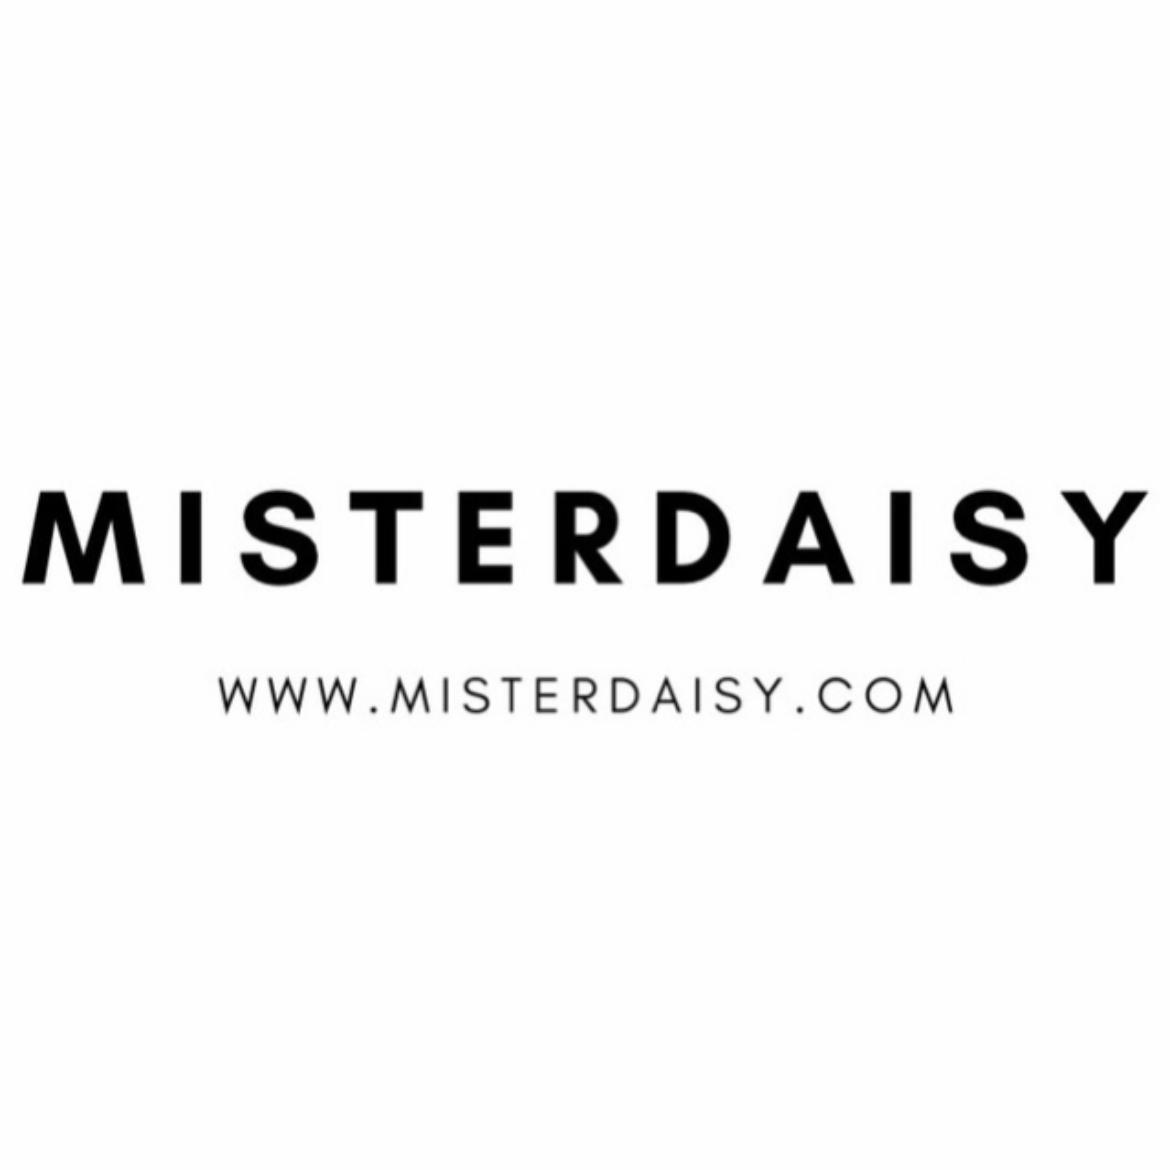 Misterdaisy's images